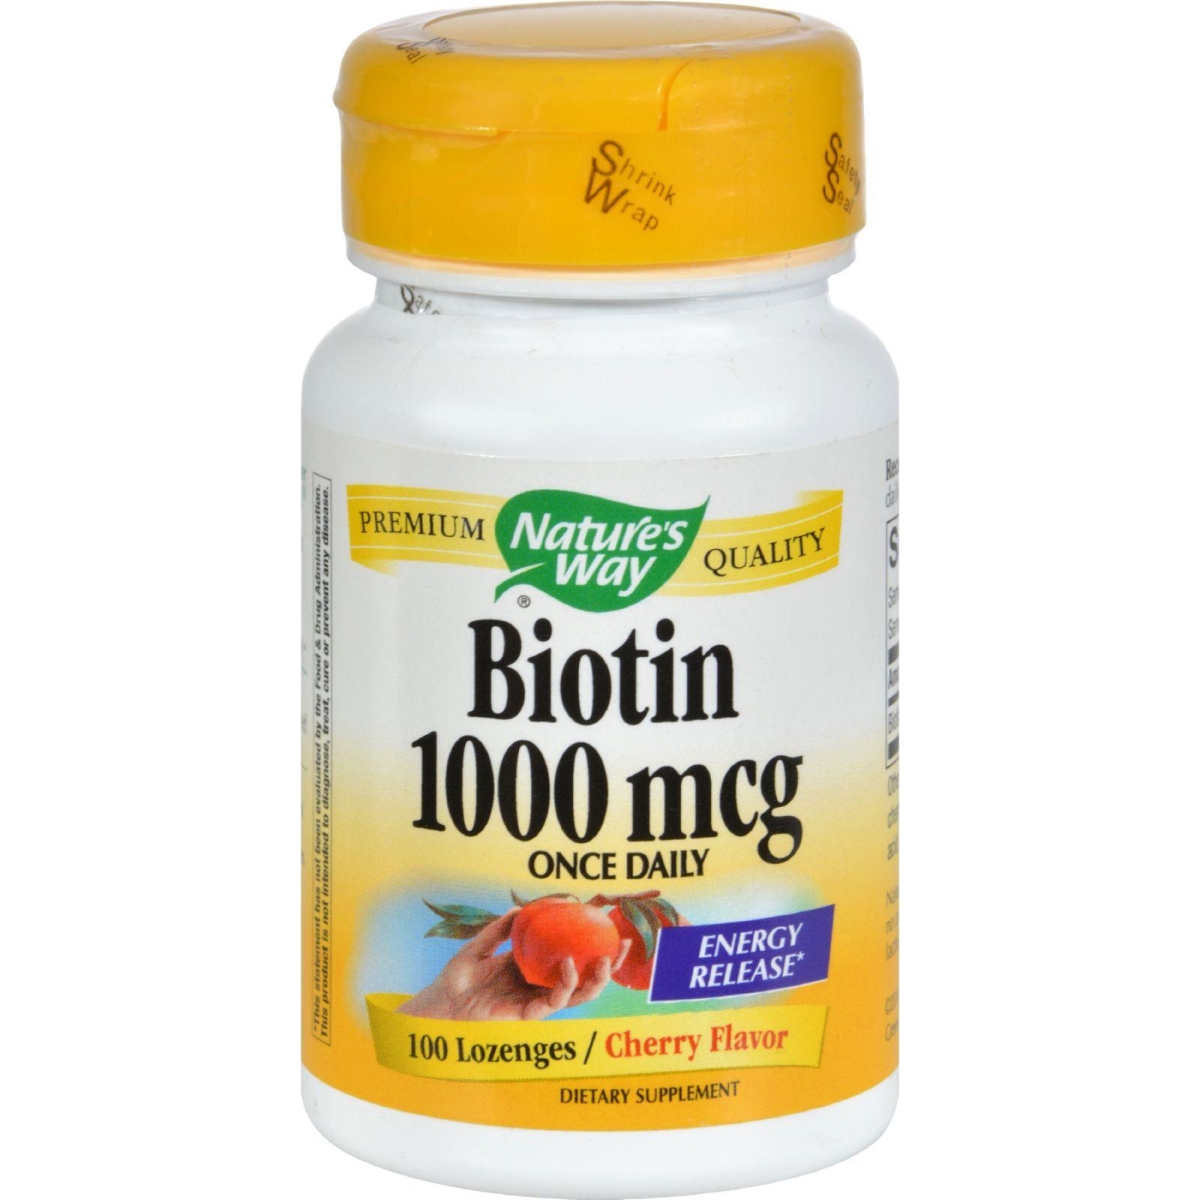 Hg0817163 1000 Mcg Biotin, 100 Lozenges